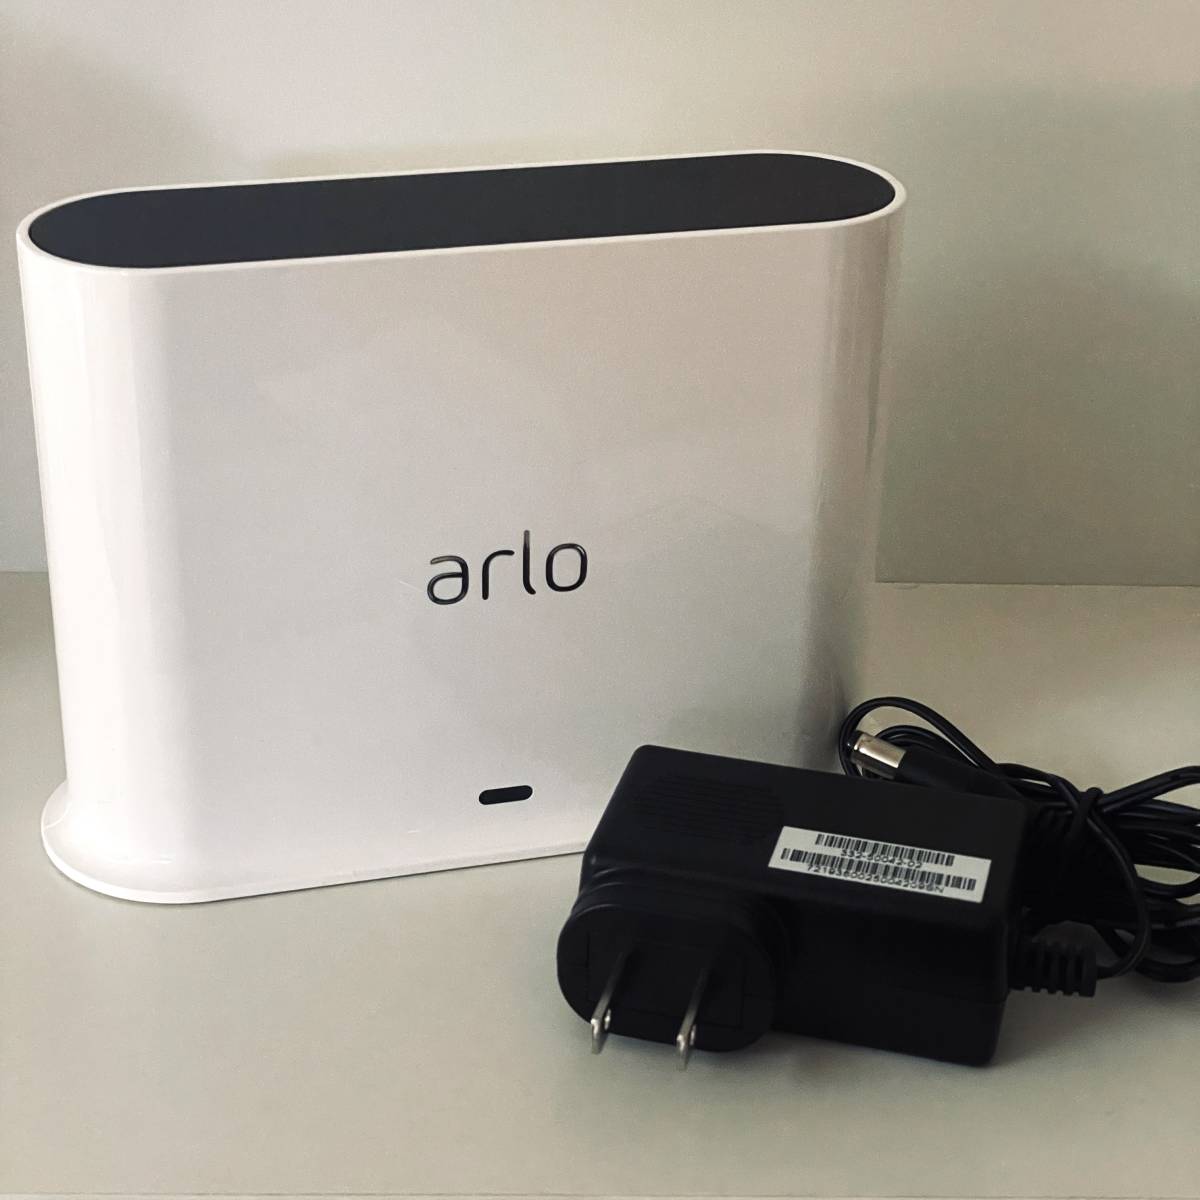 Arloa-ro wireless security camera for base station VMB4500